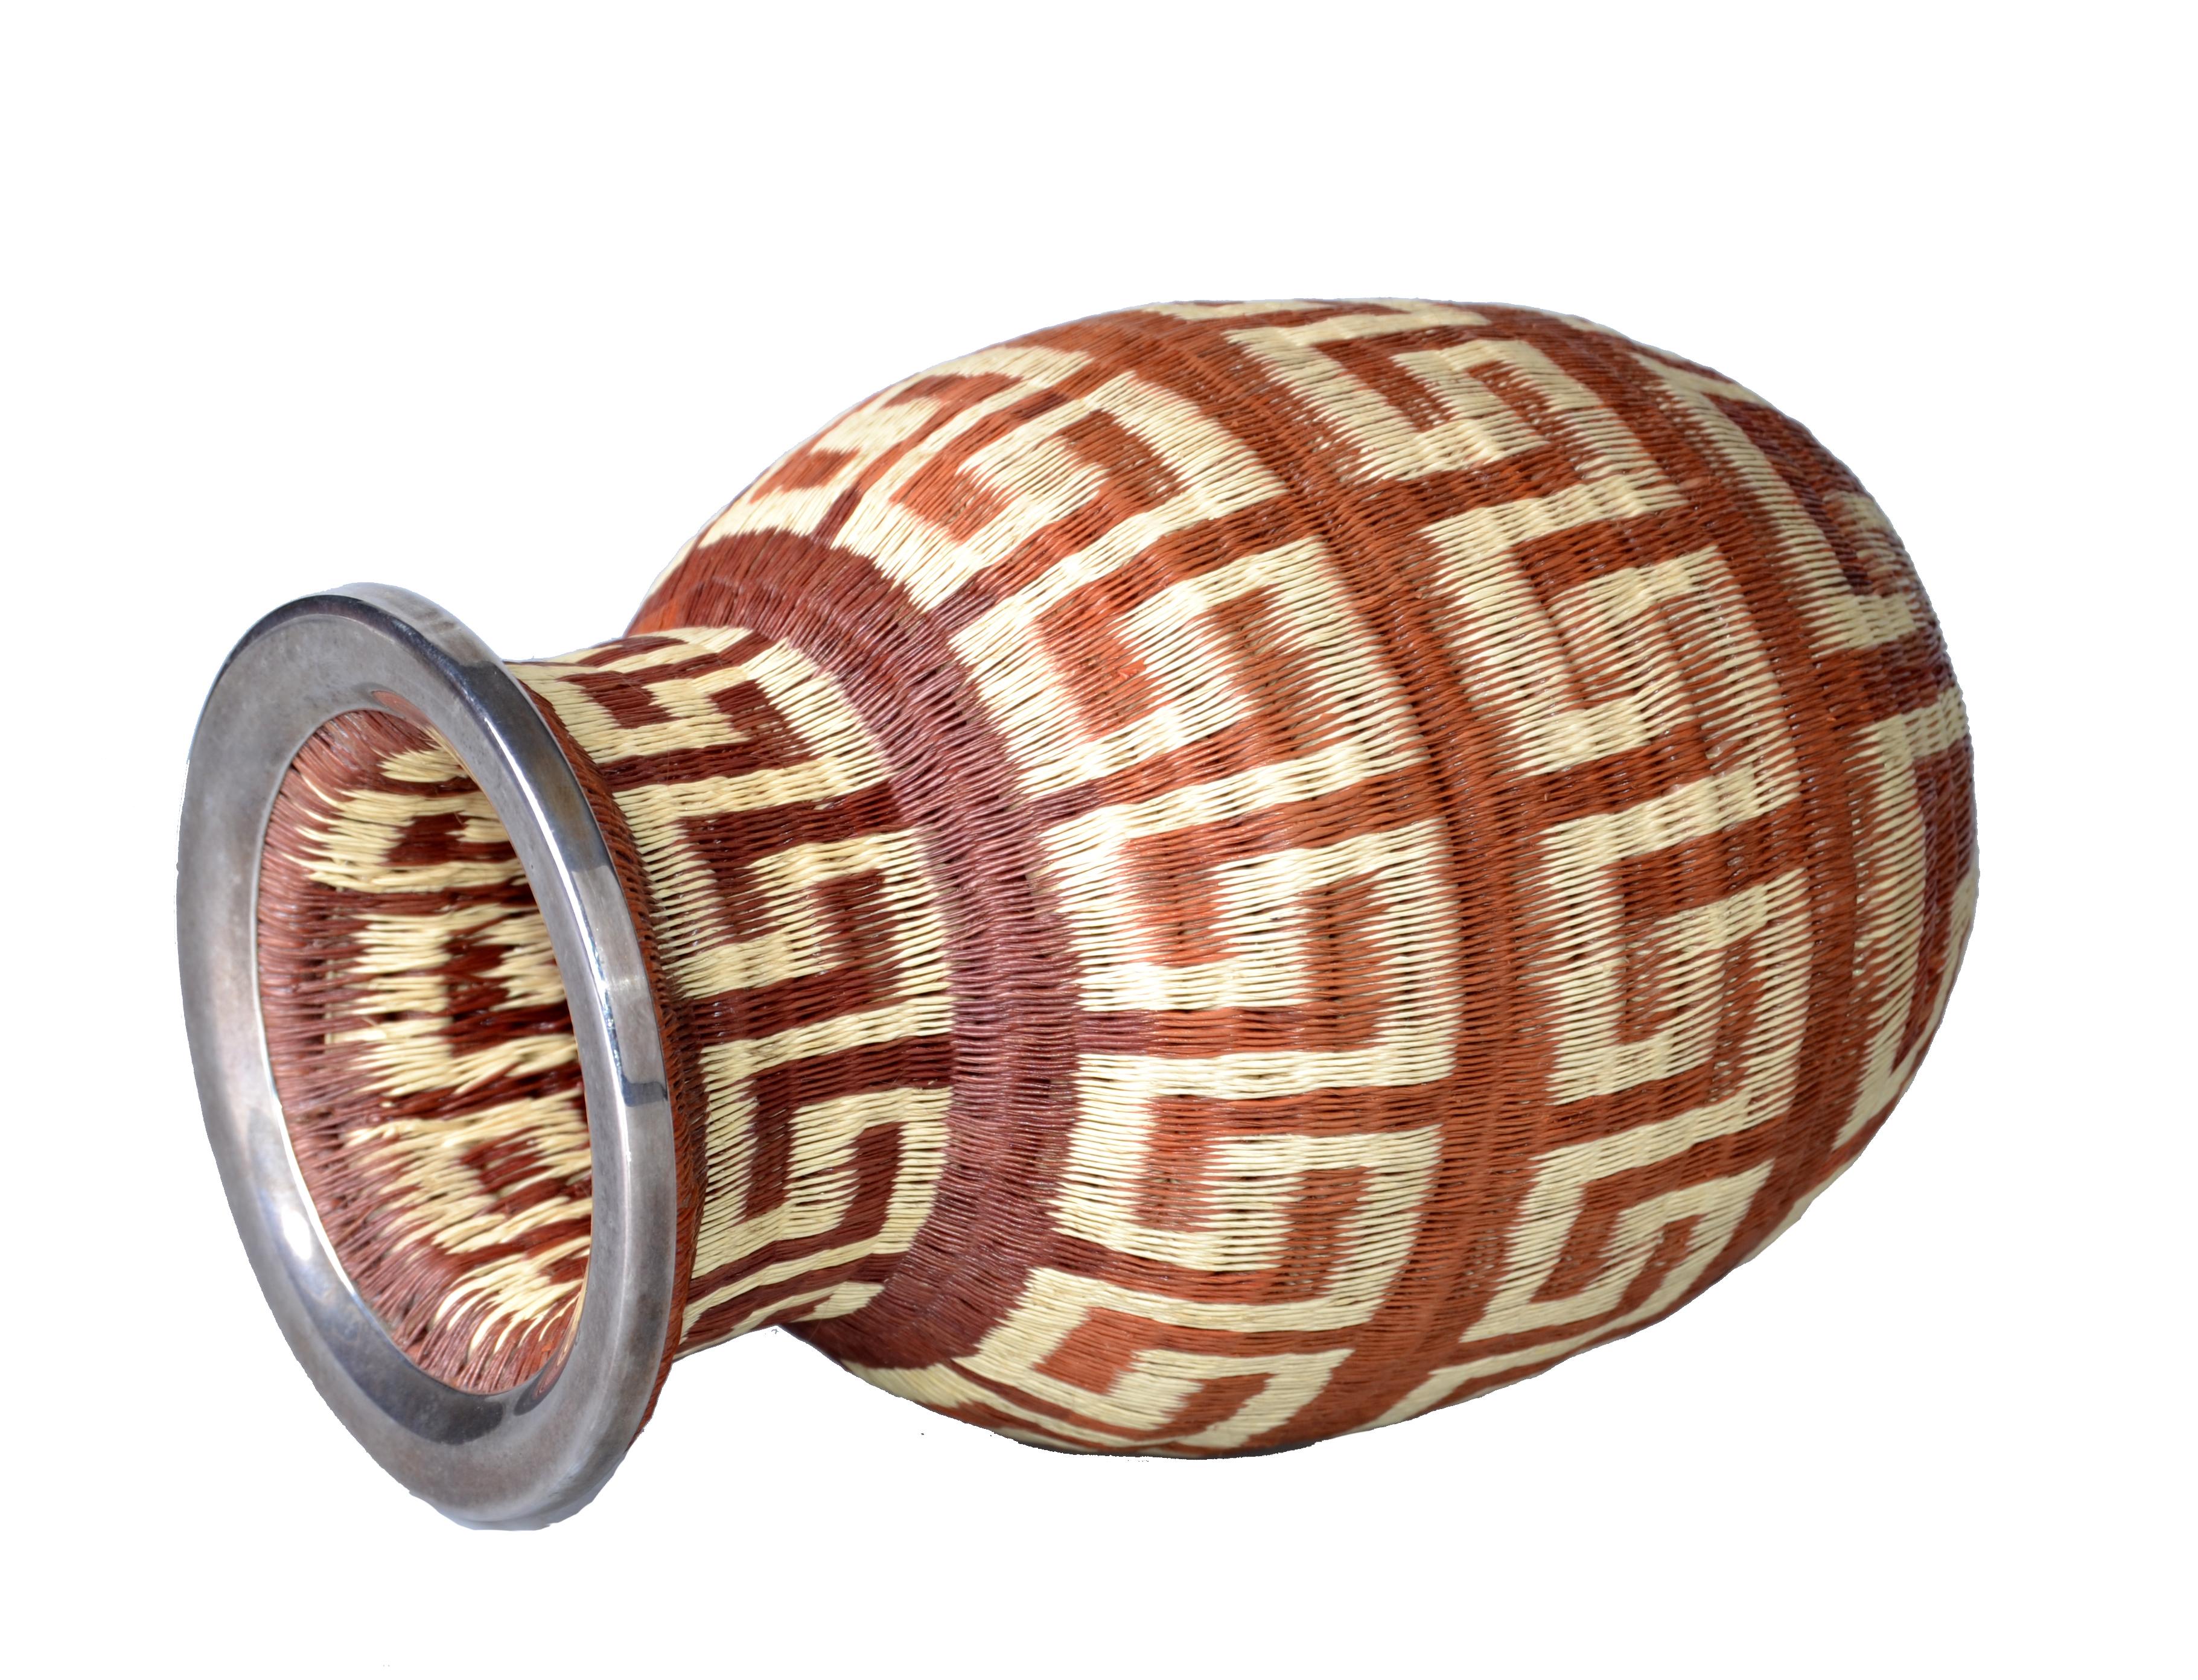 Polished Native American Style Handwoven Vase